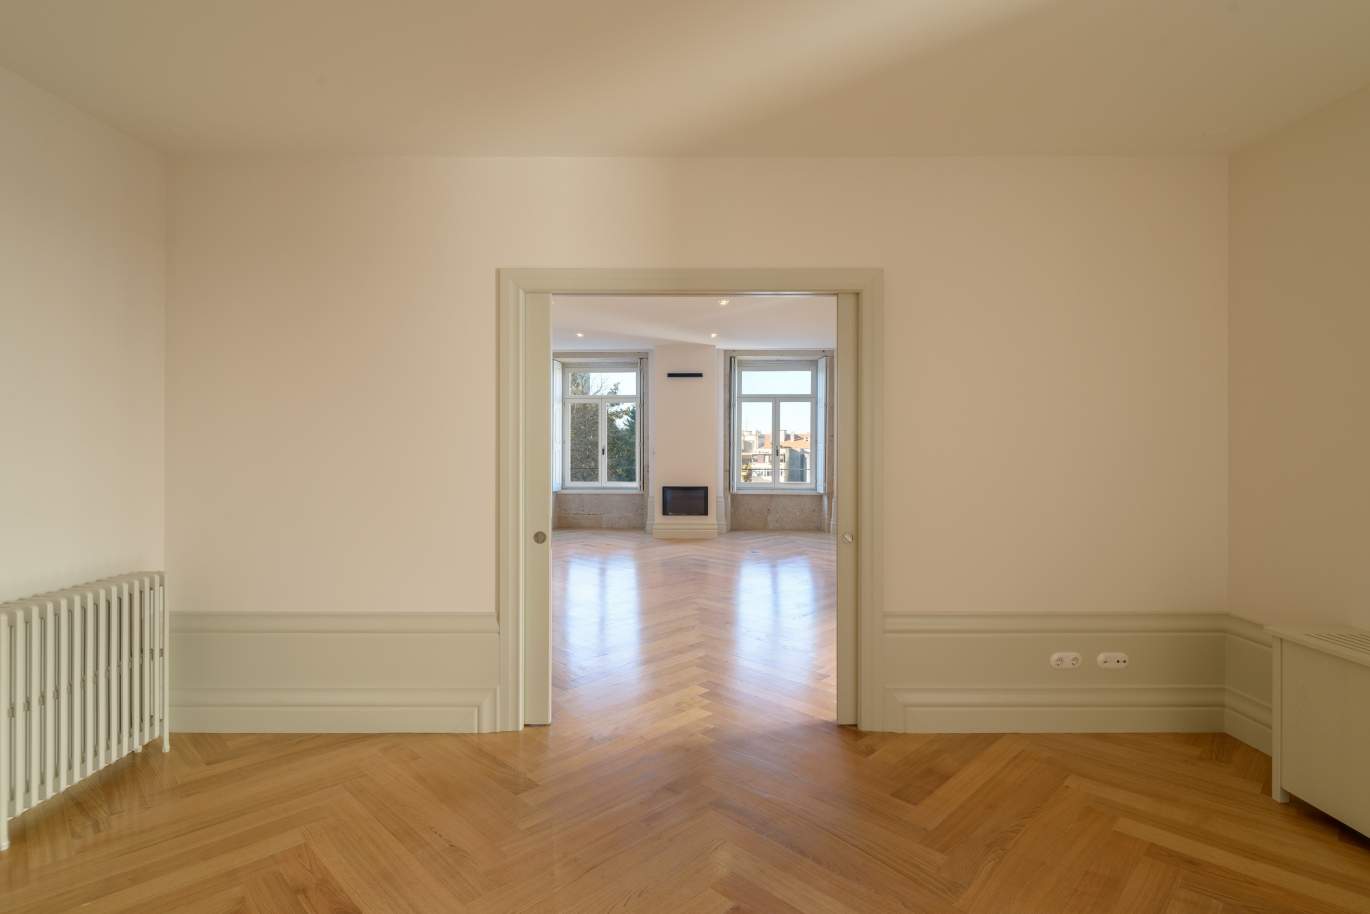 New apartment for sale in luxury development, Cedofeita,Porto,Portugal_161690